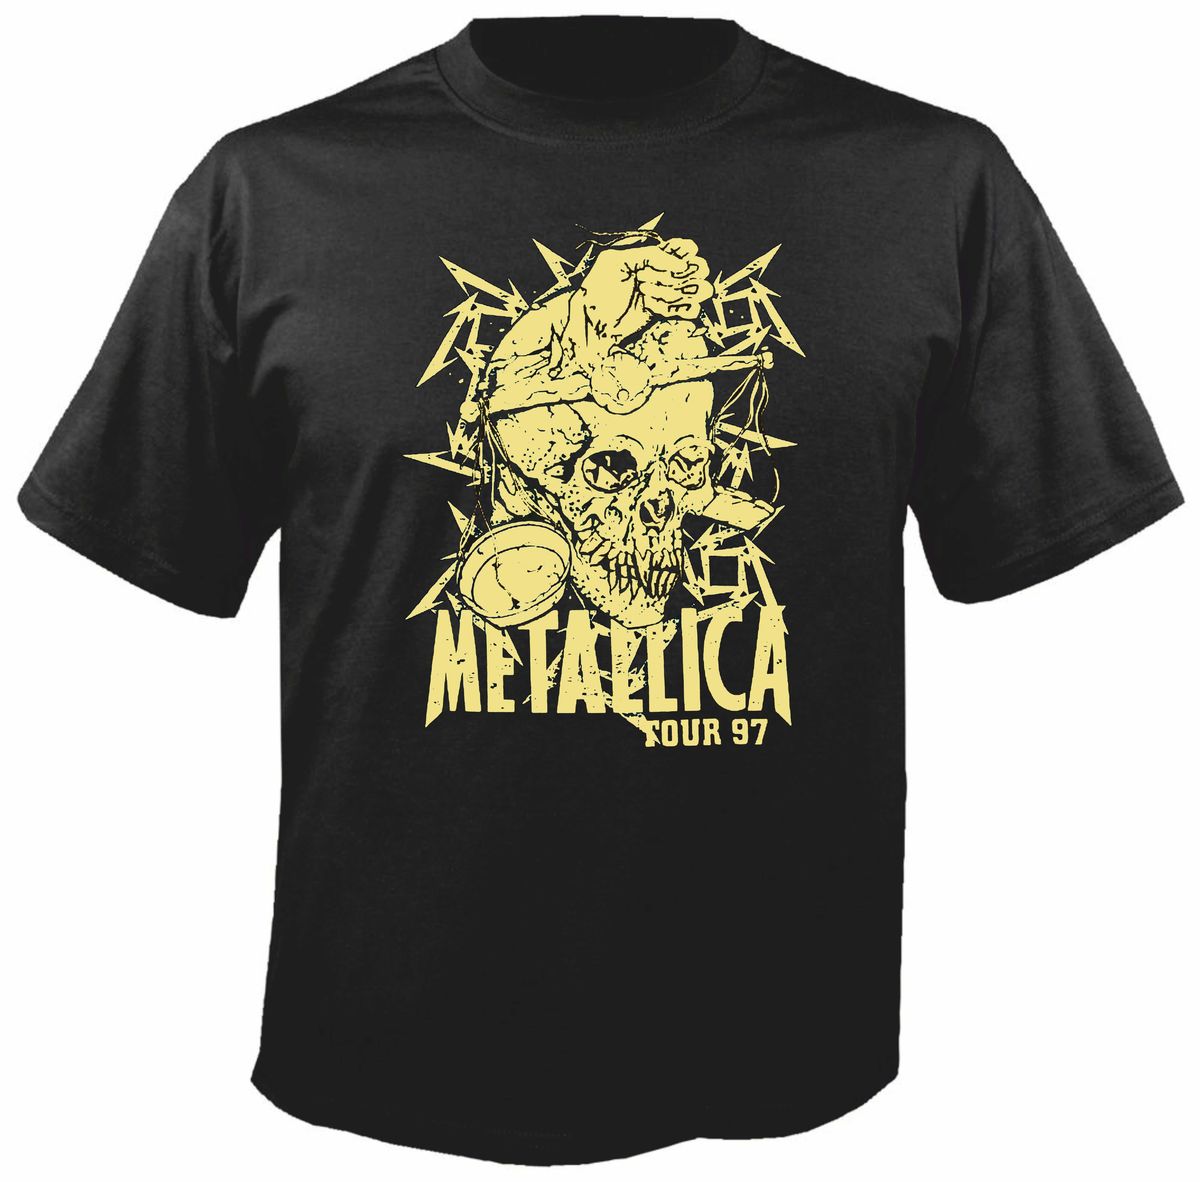 Metallica Tour 97 T-Shirt – Metal & Rock T-shirts and Accessories